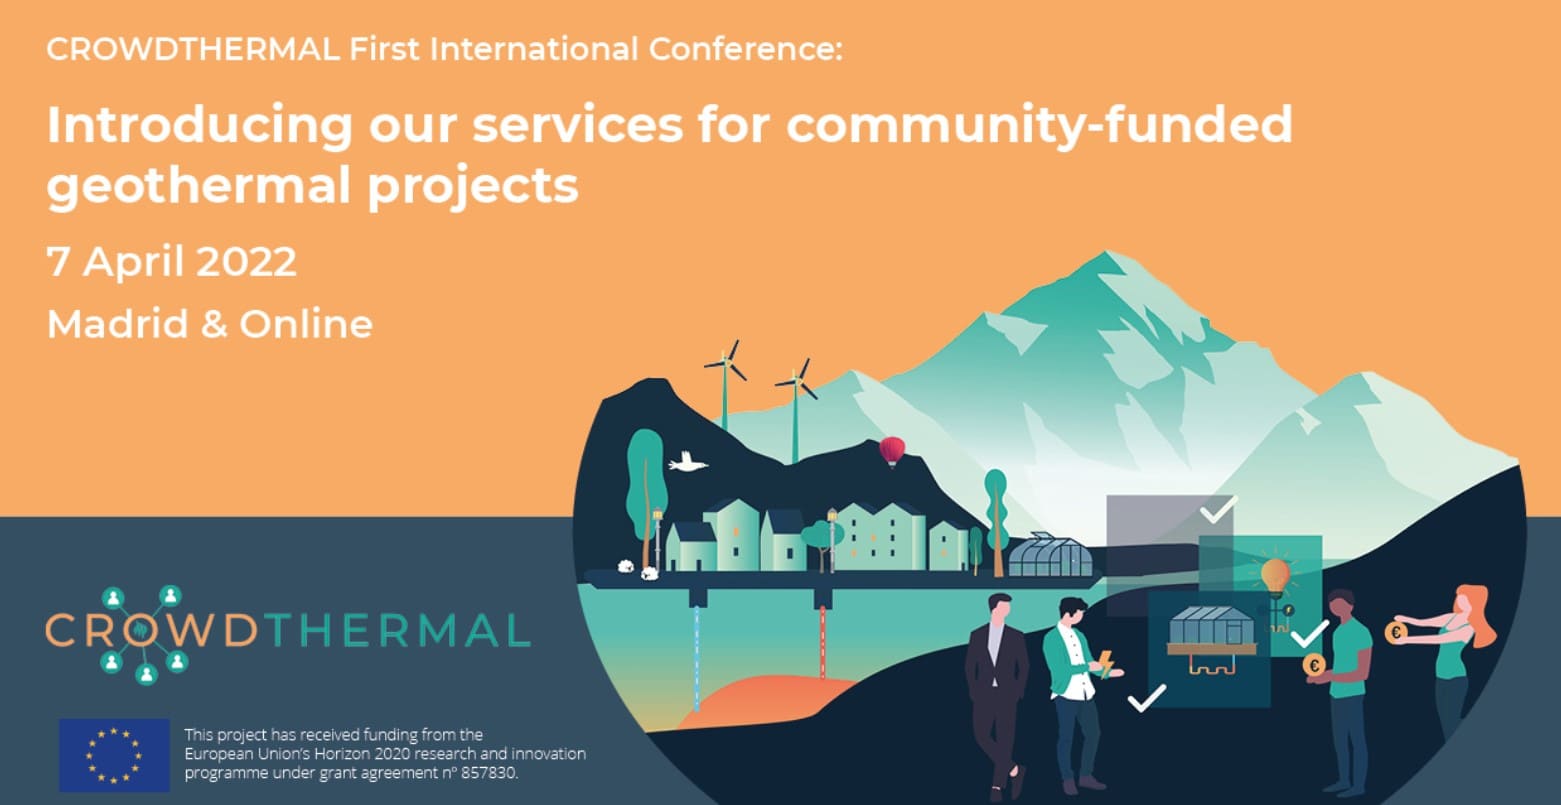 CrowdThermal International Conference_コミュニティ資金による地熱プロジェクトのサービスのご紹介 - CrowdfundingHub